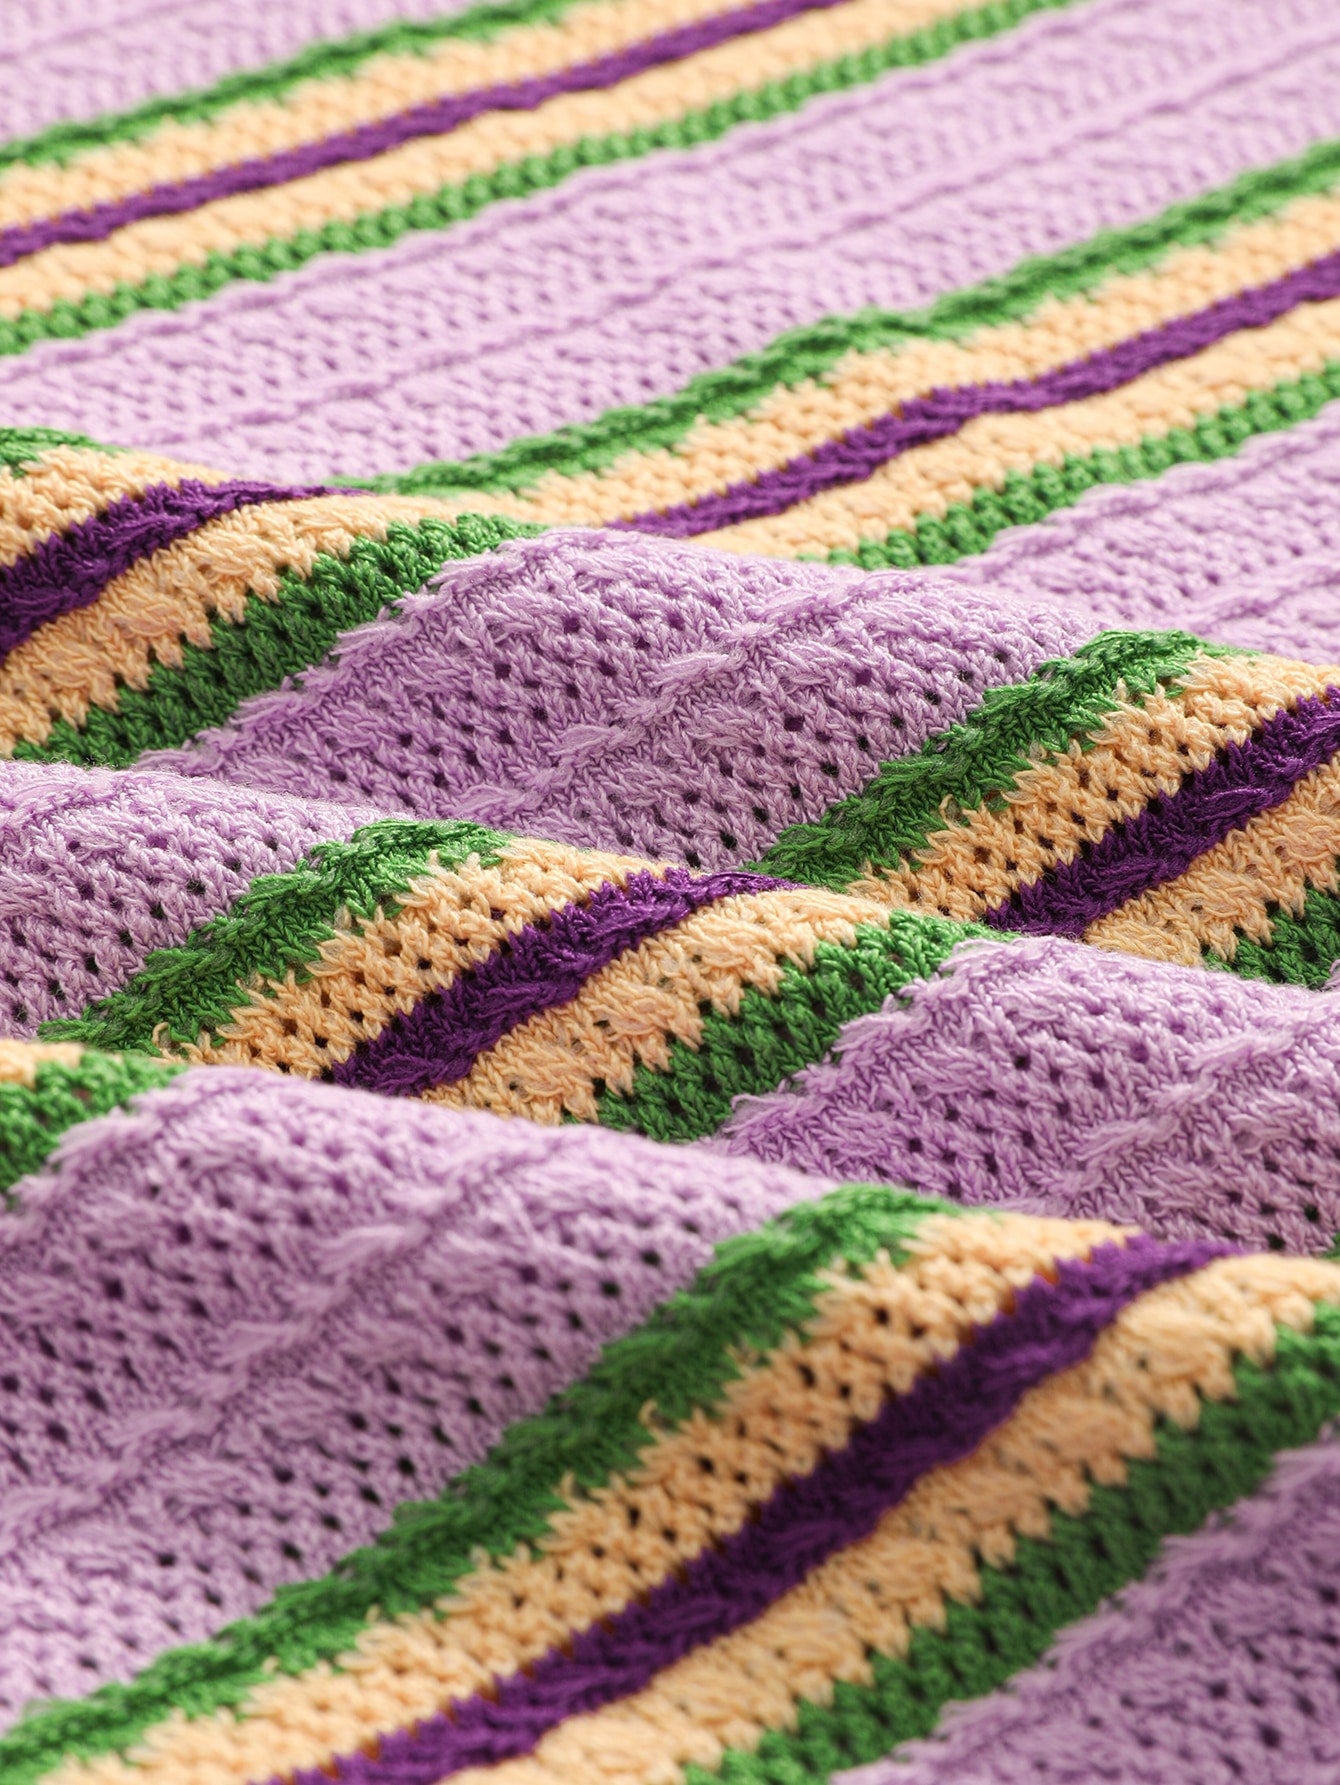 Block Striped Pattern Knit Top